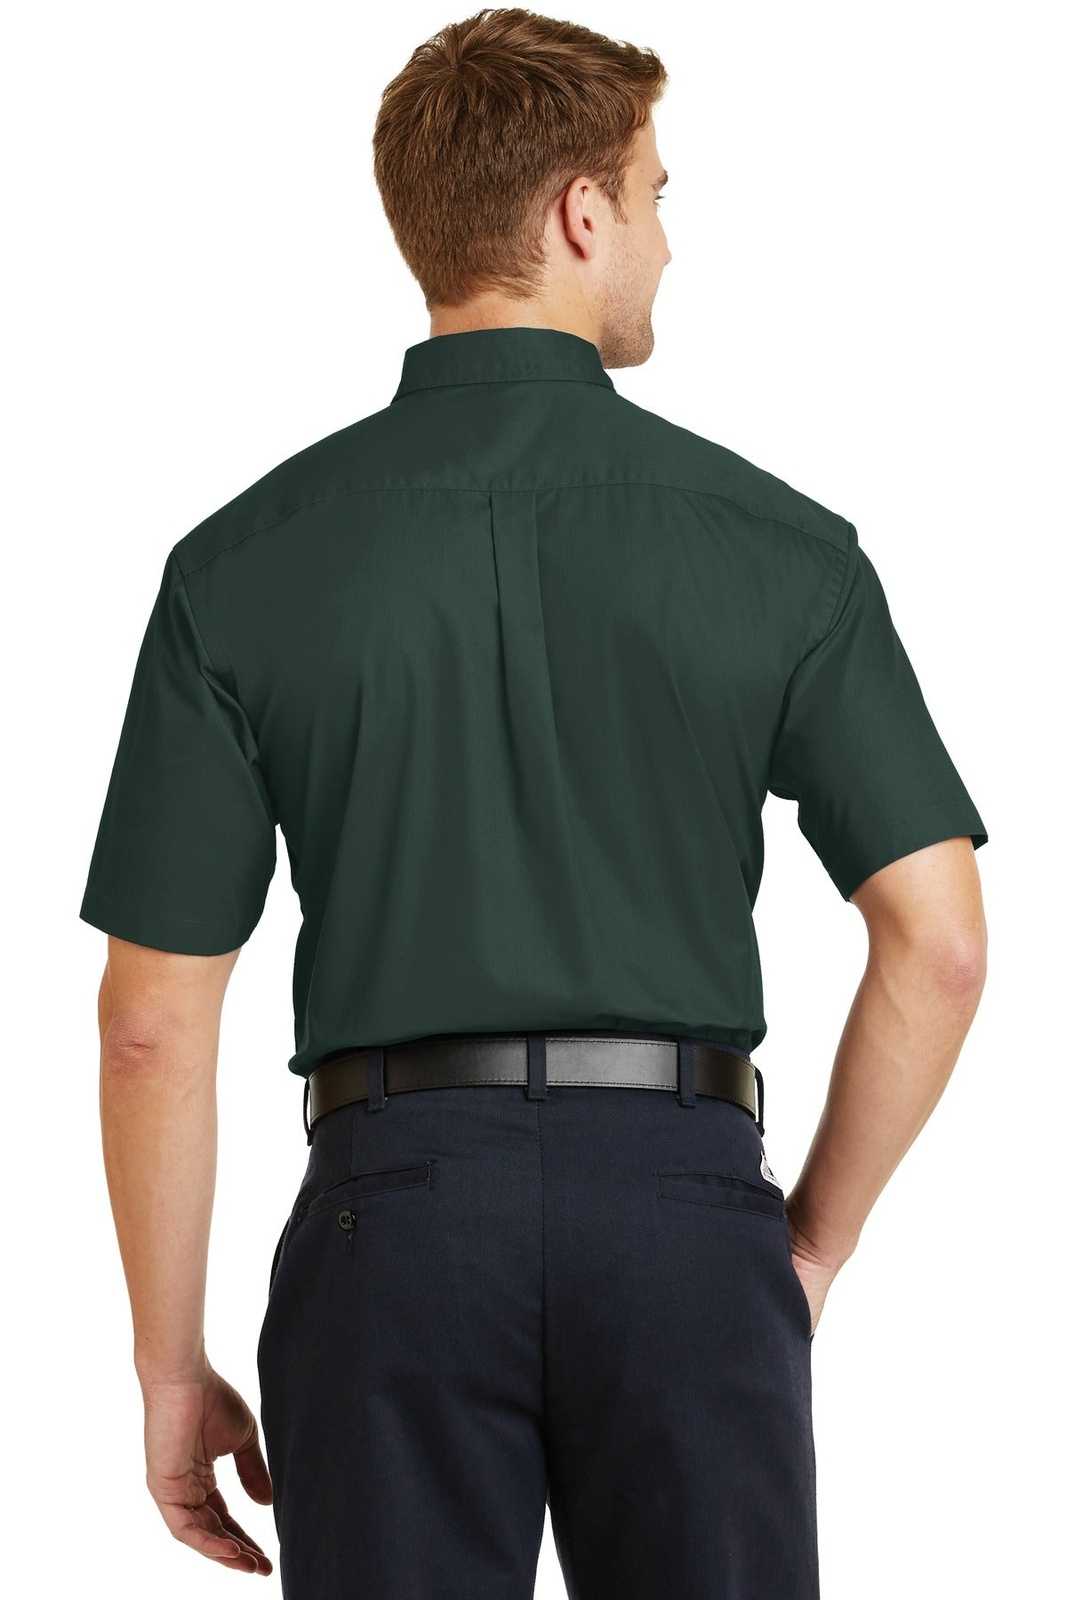 CornerStone SP18 Short Sleeve Superpro Twill Shirt - Dark Green - HIT a Double - 2